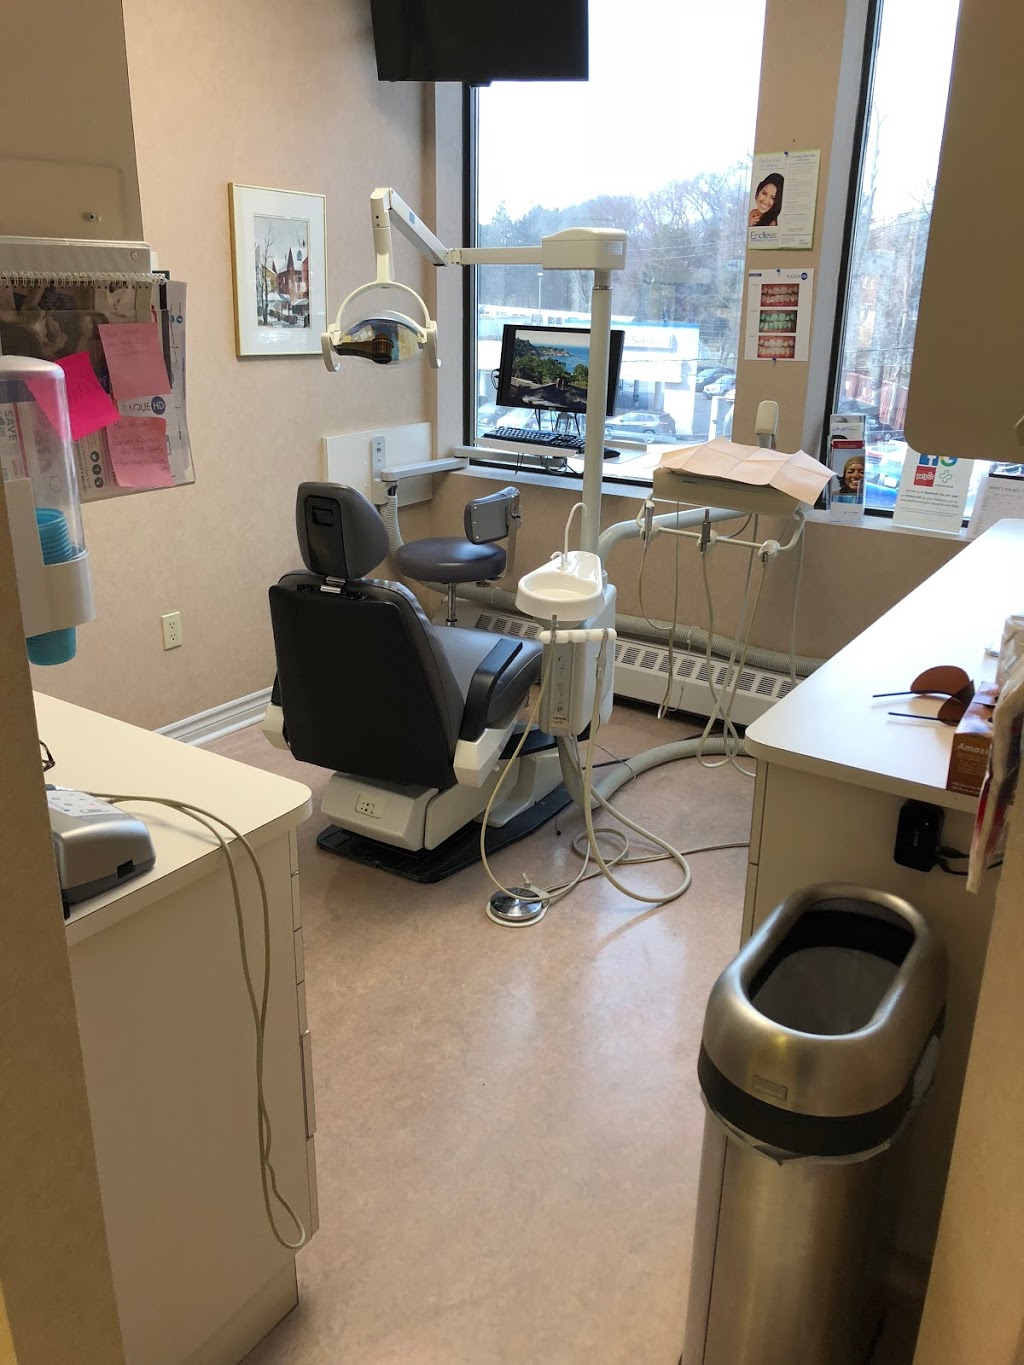 Dental Health Centre in the Kingsway- Dr Kutzko | 3101 Bloor St W, Etobicoke, ON M8X 2W2, Canada | Phone: (416) 233-6453